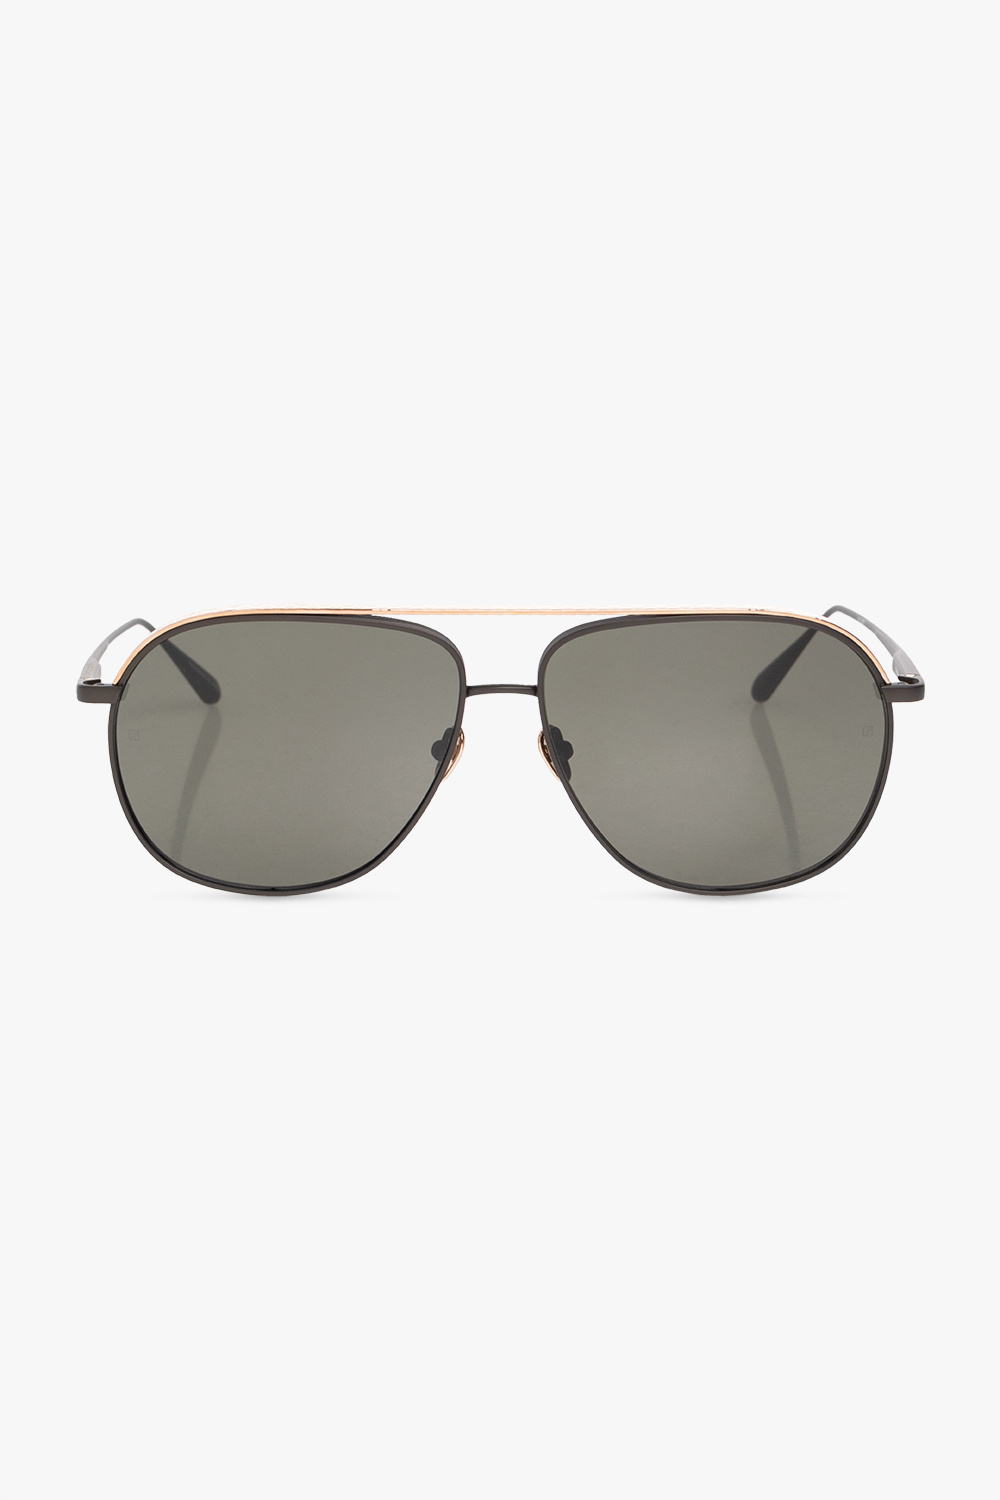 Linda Farrow ‘Matis’ aviator sunglasses